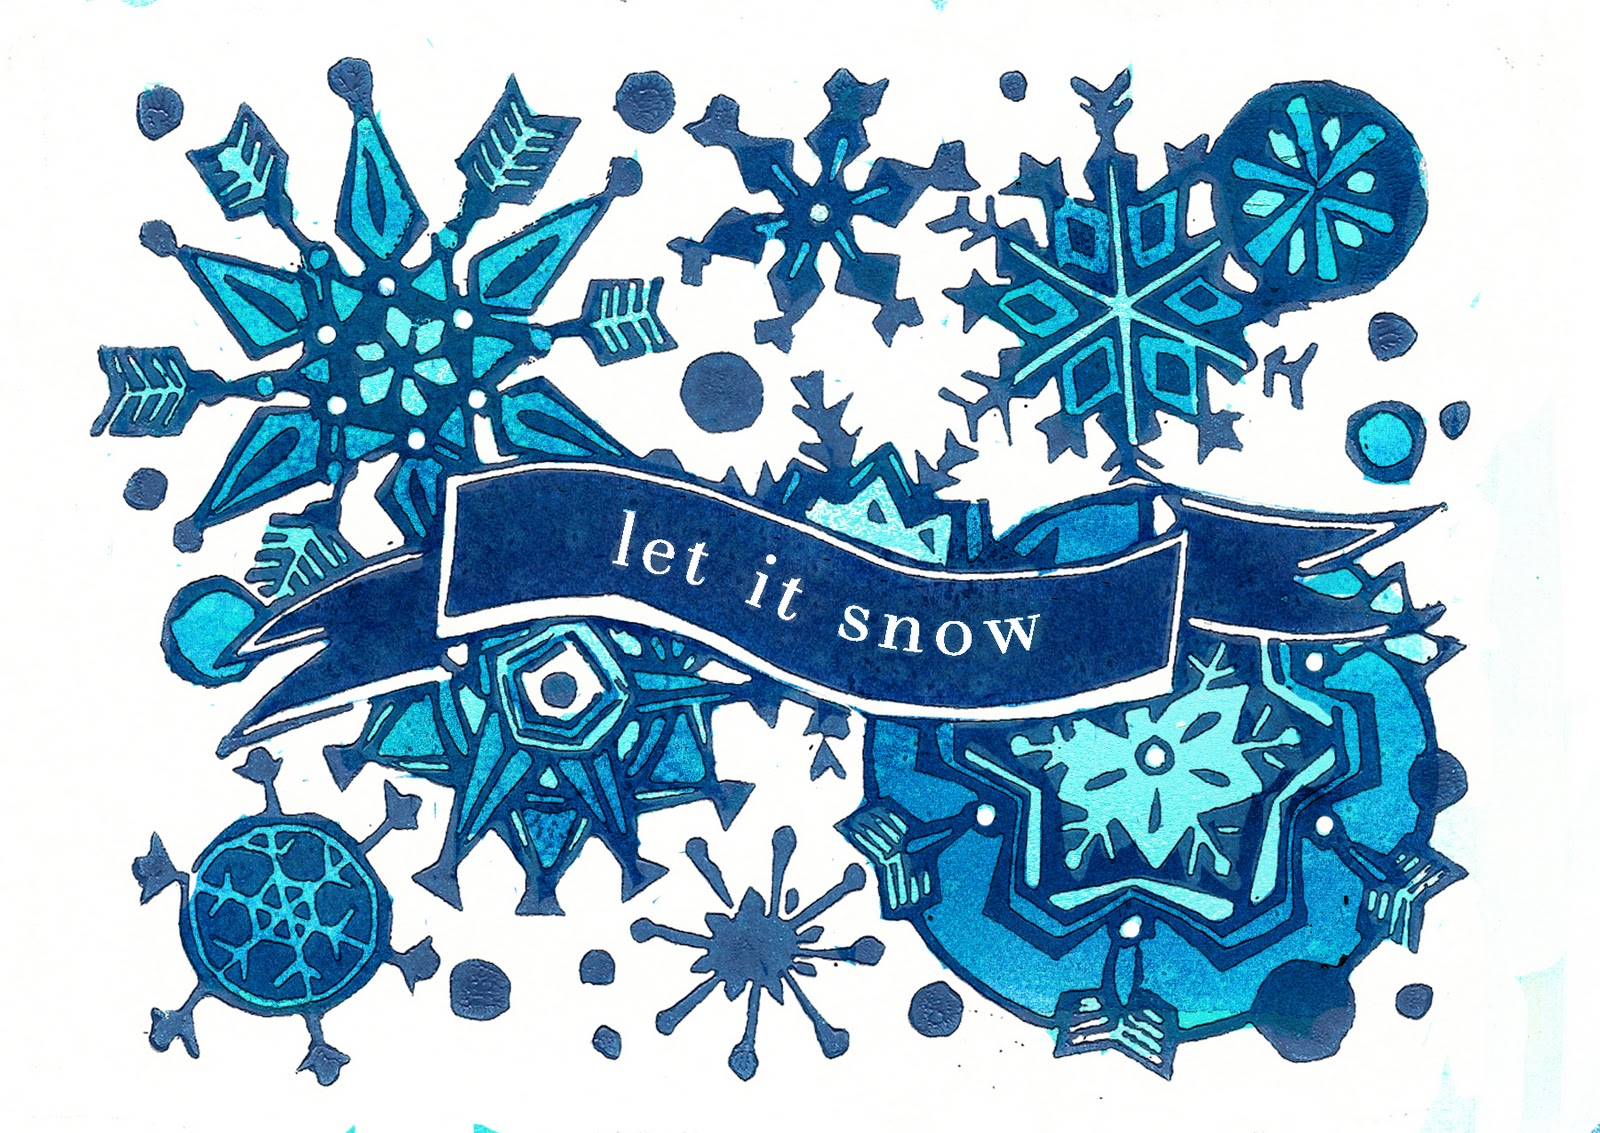 lissartori: Let it Snow